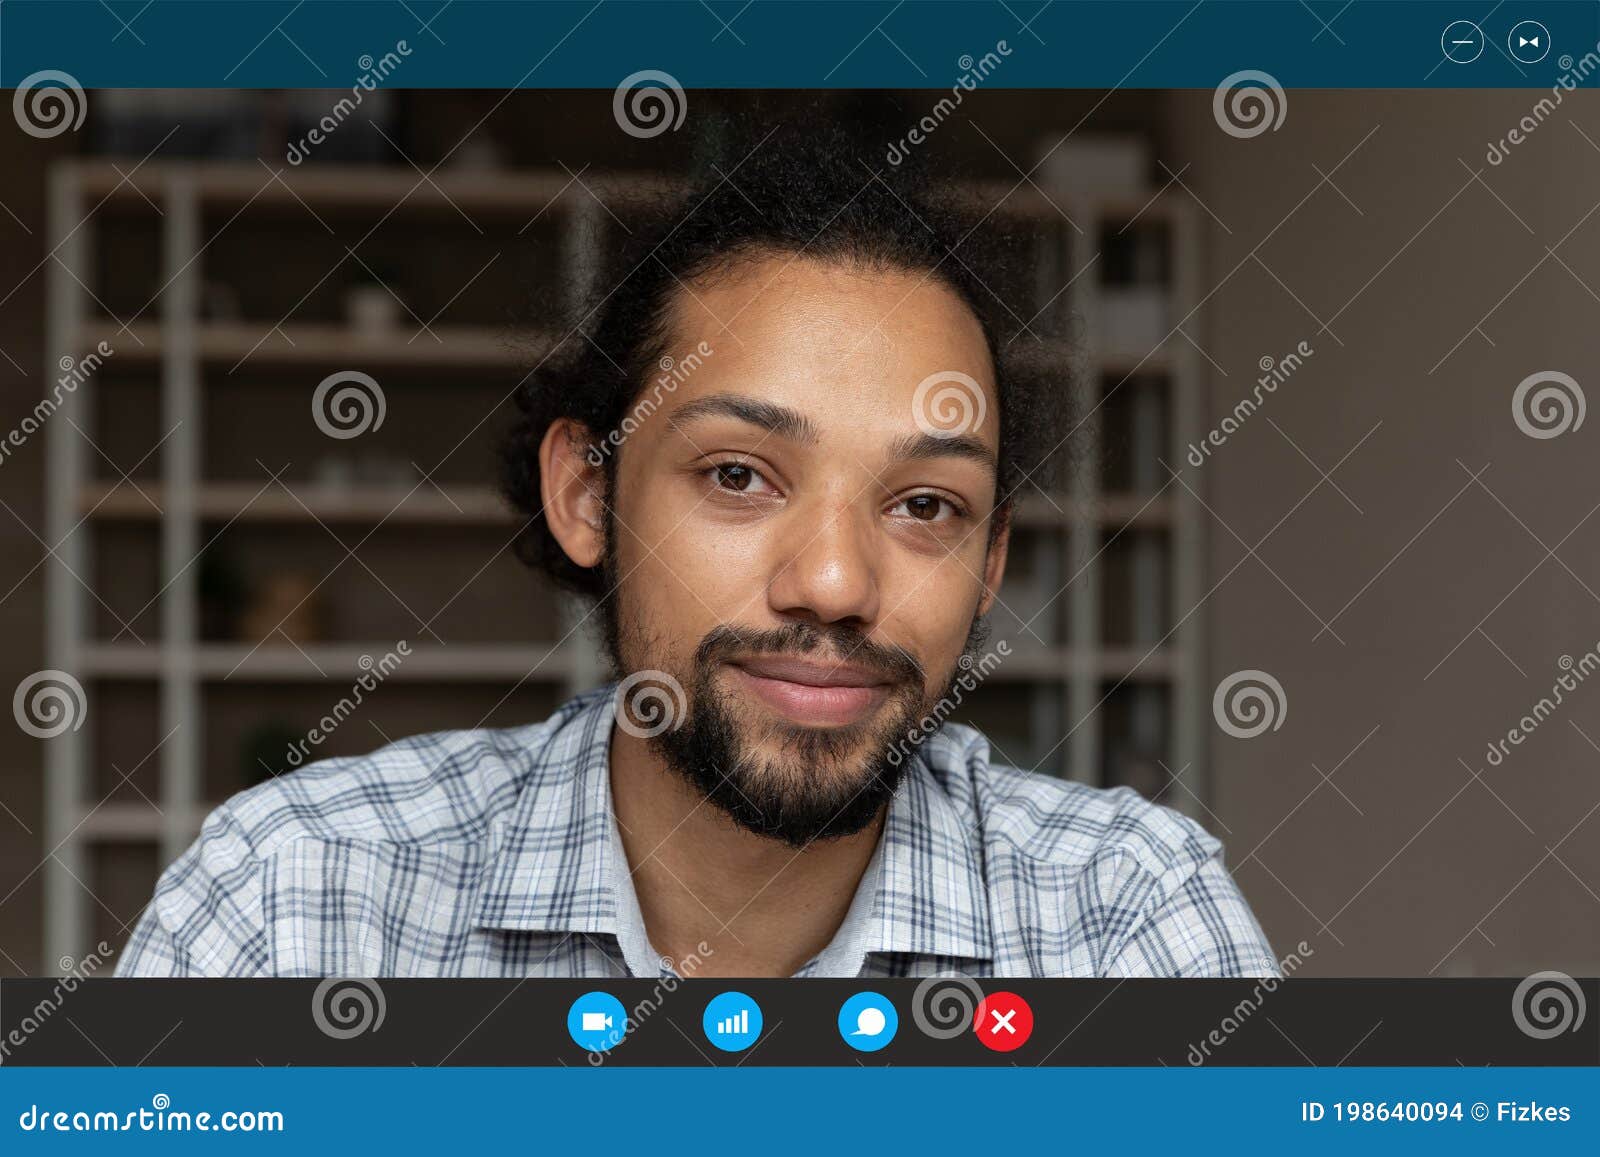 African American Man Speak on Video Call Stock Photo photo